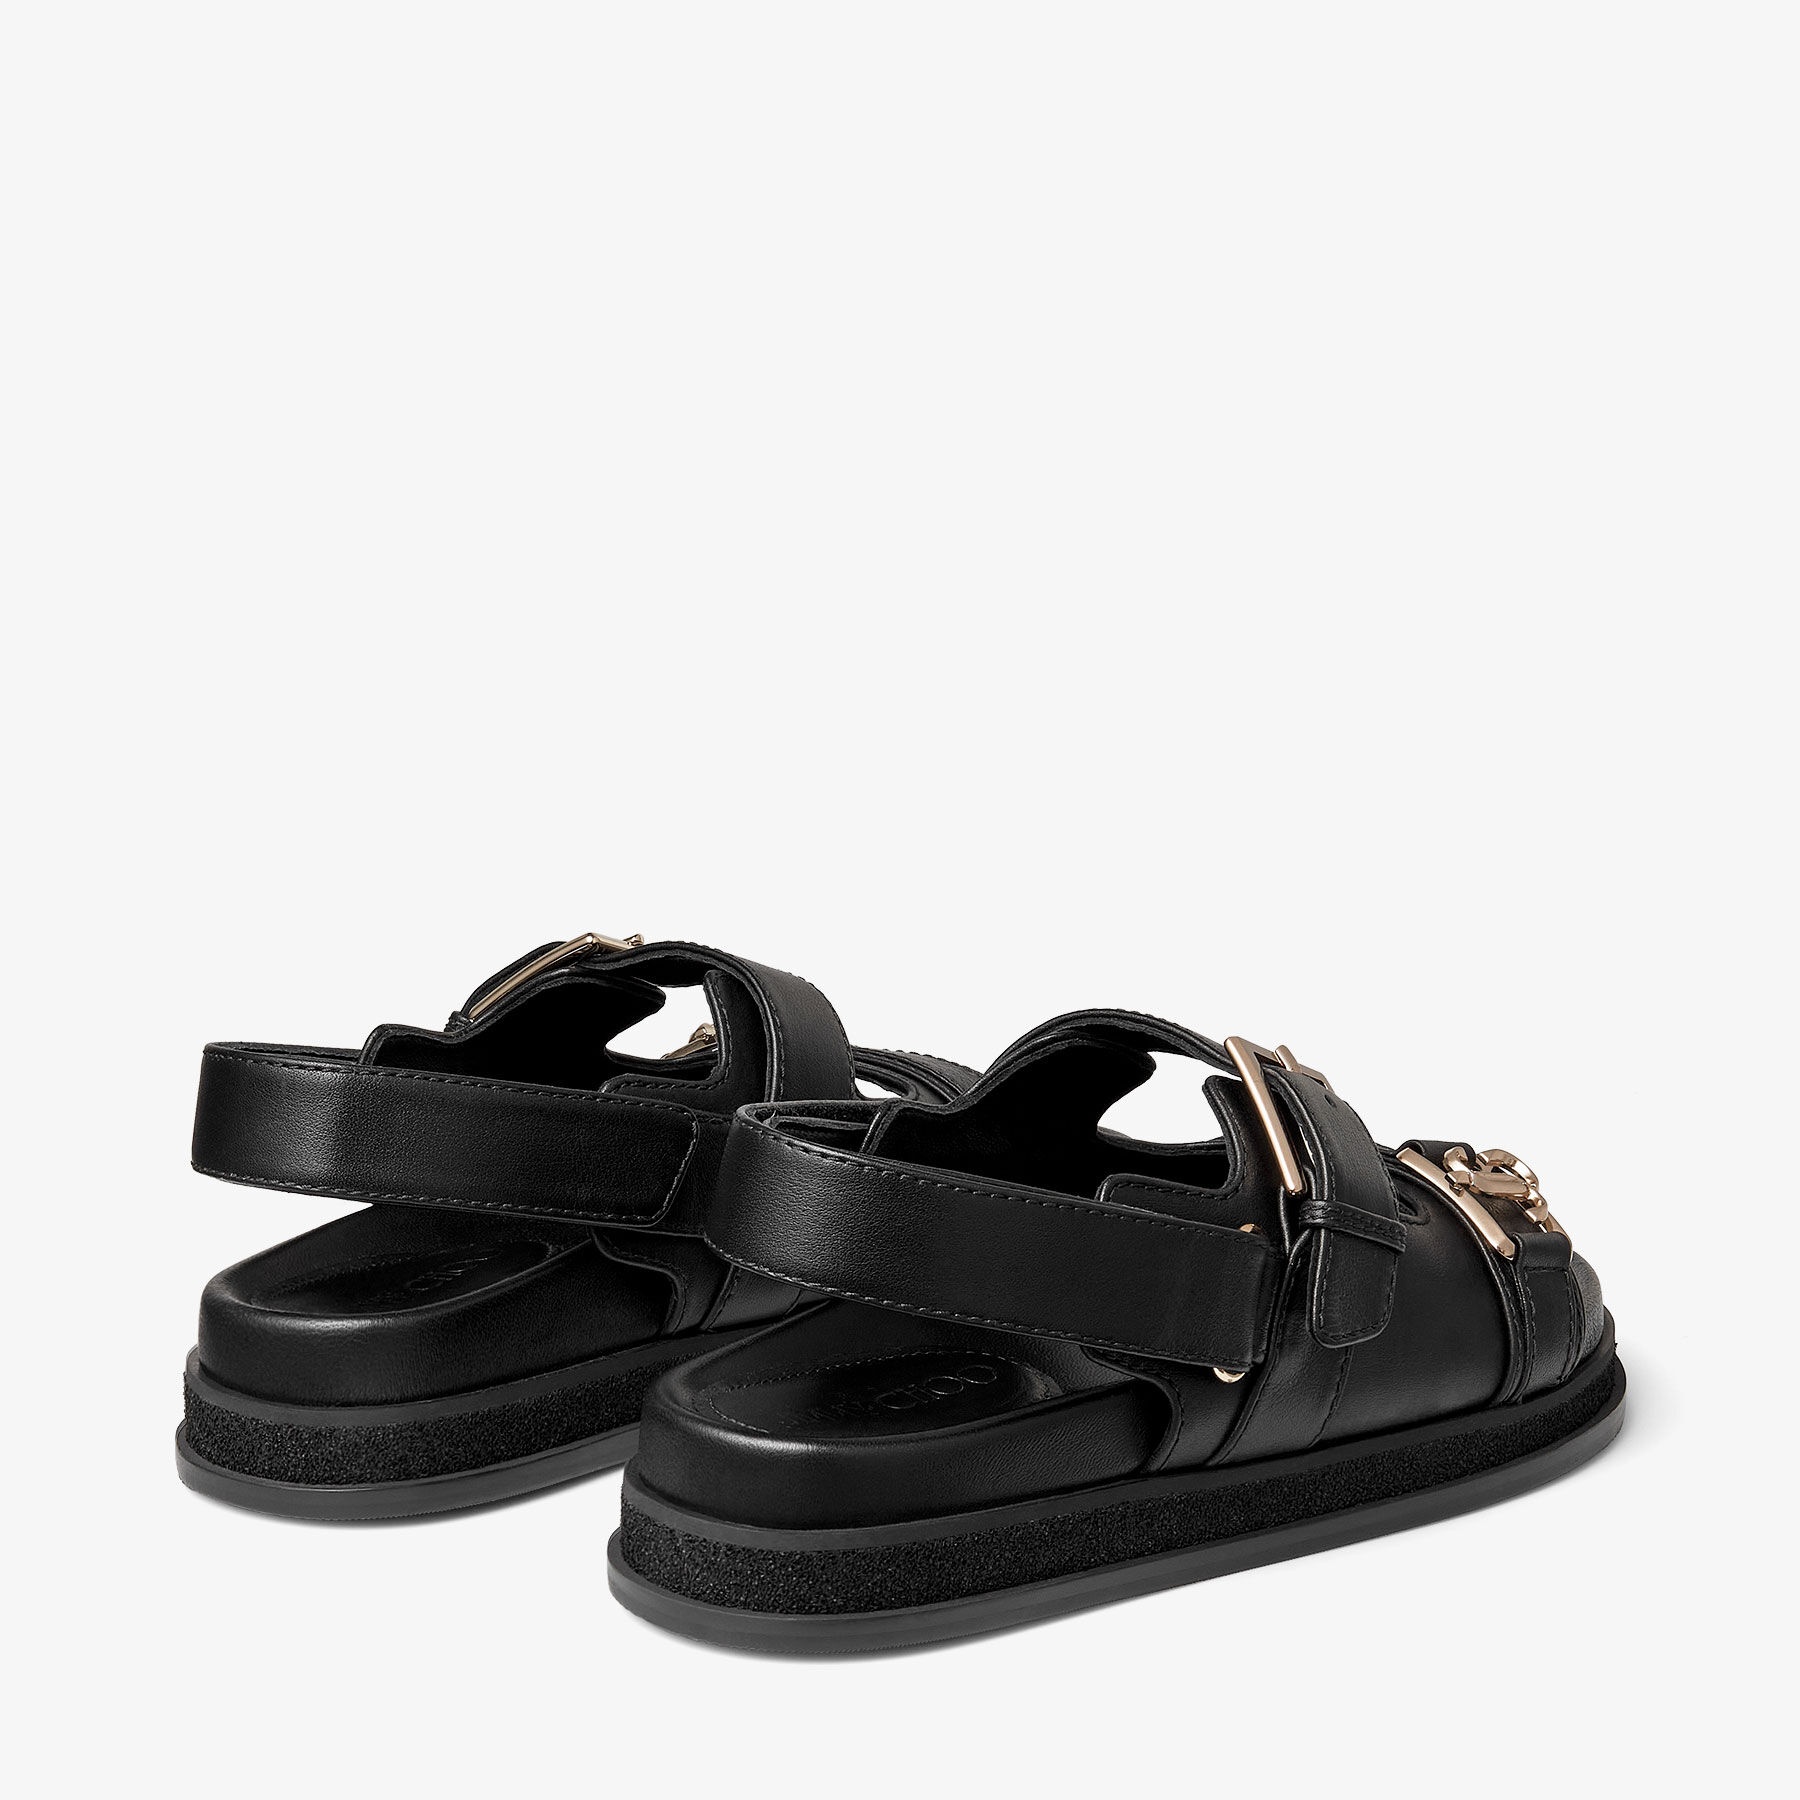 Elyn Flat
Black Calf Leather Flat Sandals - 5